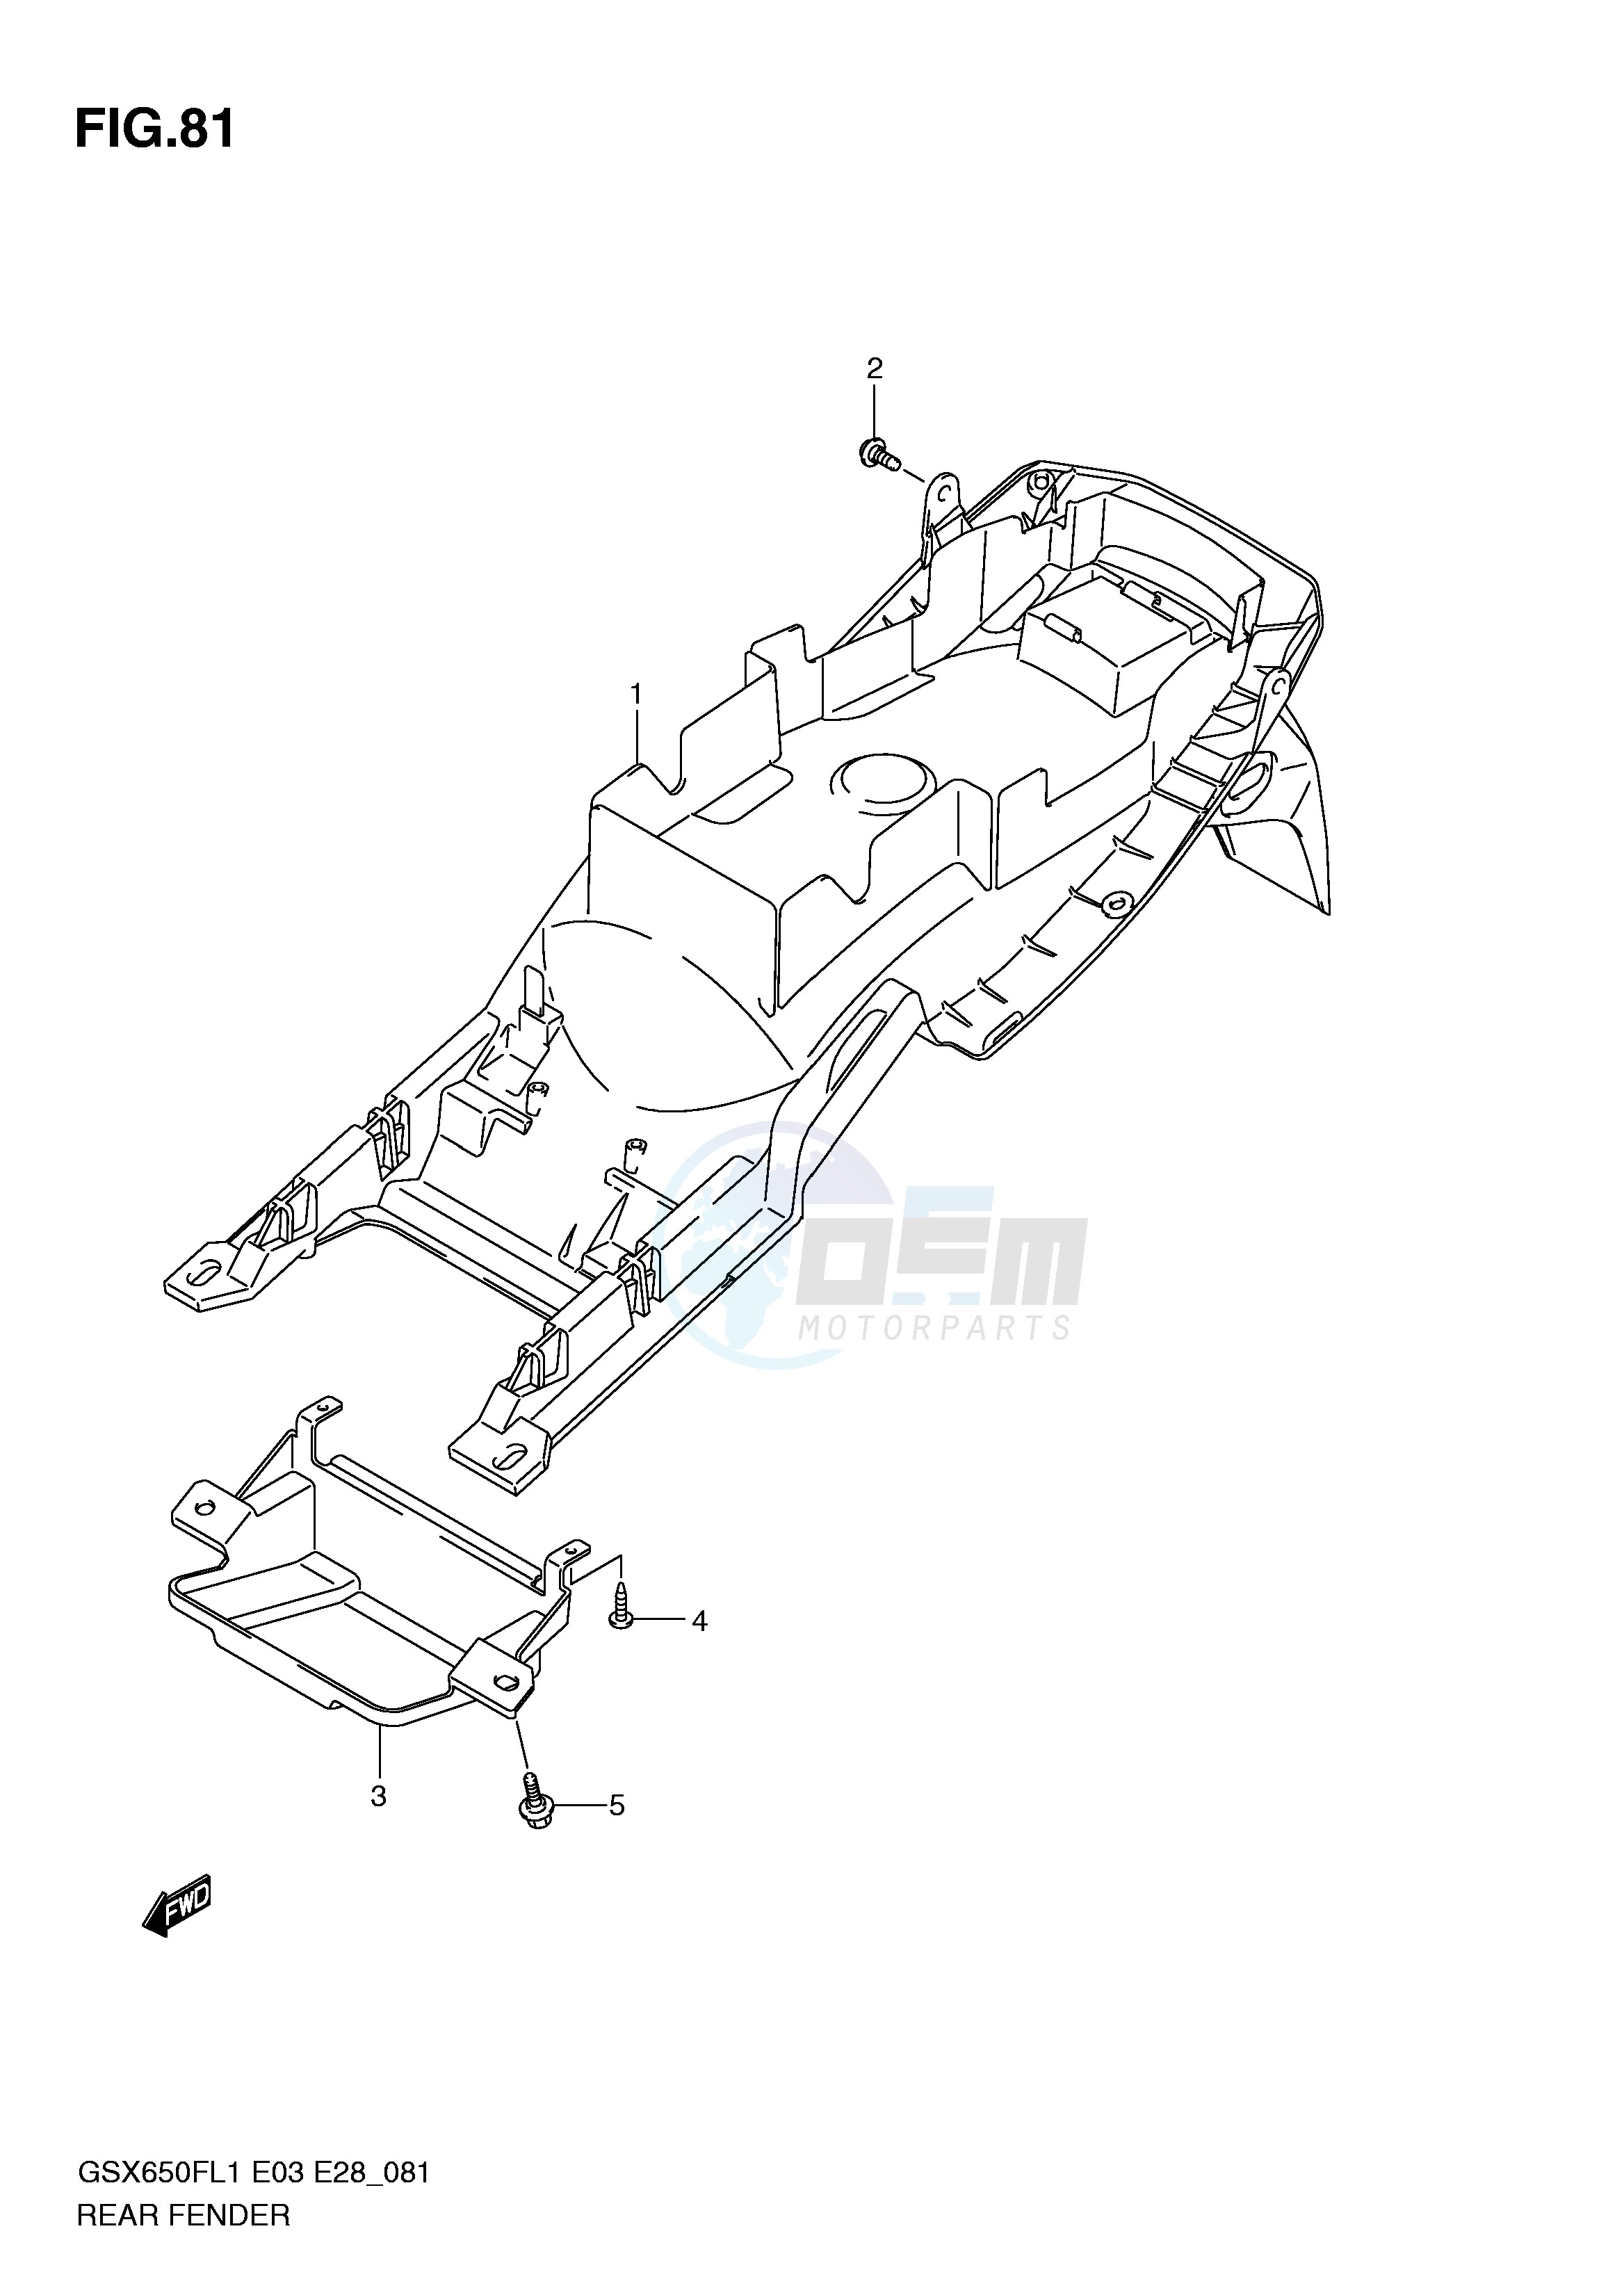 REAR FENDER (GSX650FL1 E3) blueprint